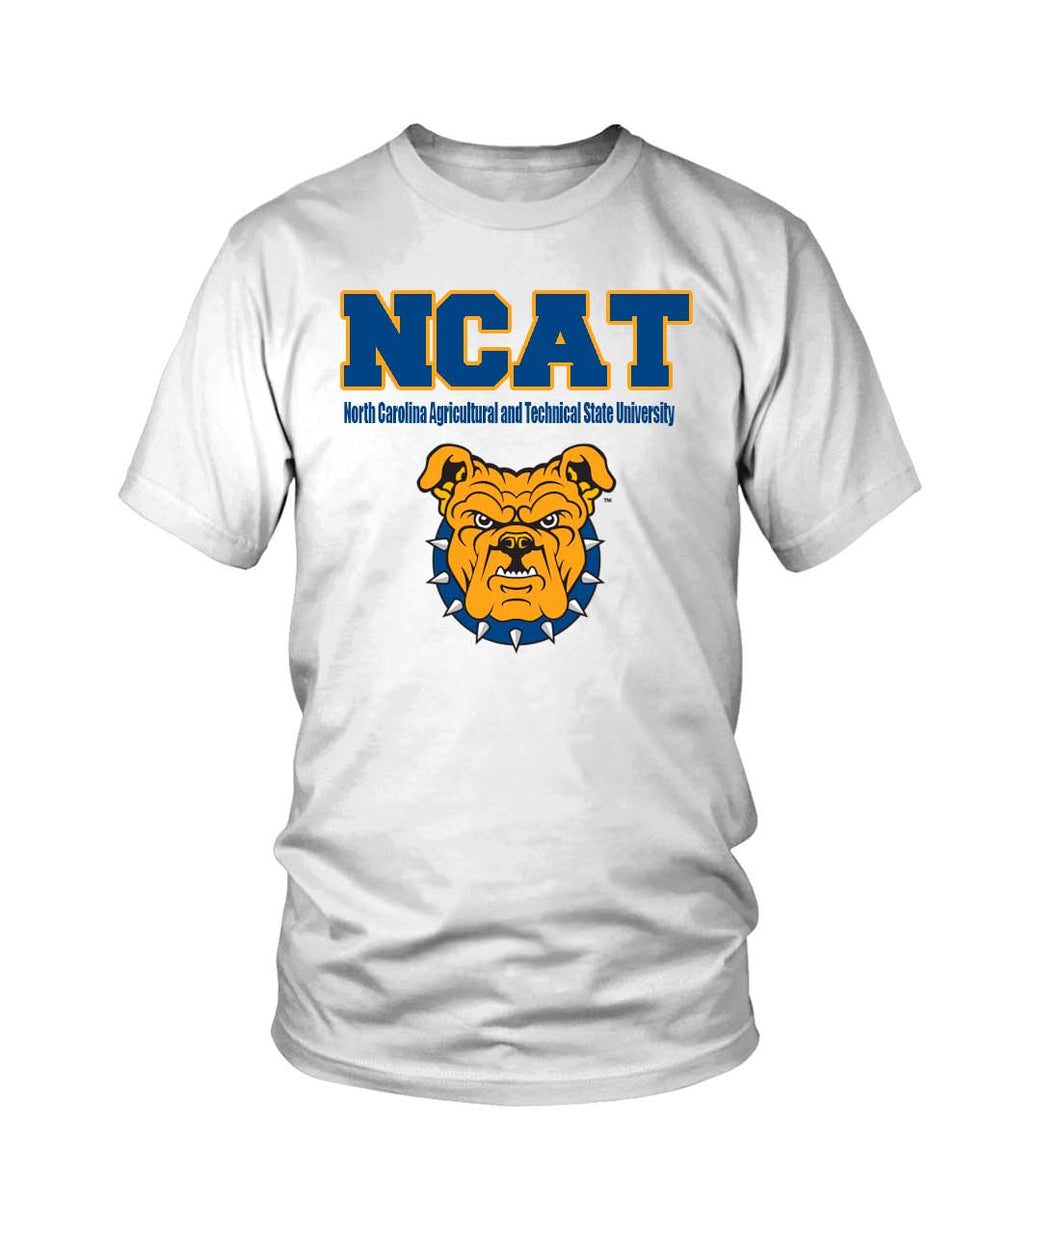 North Carolina Agricultural and Technical State University Block Mascot T-Shirt